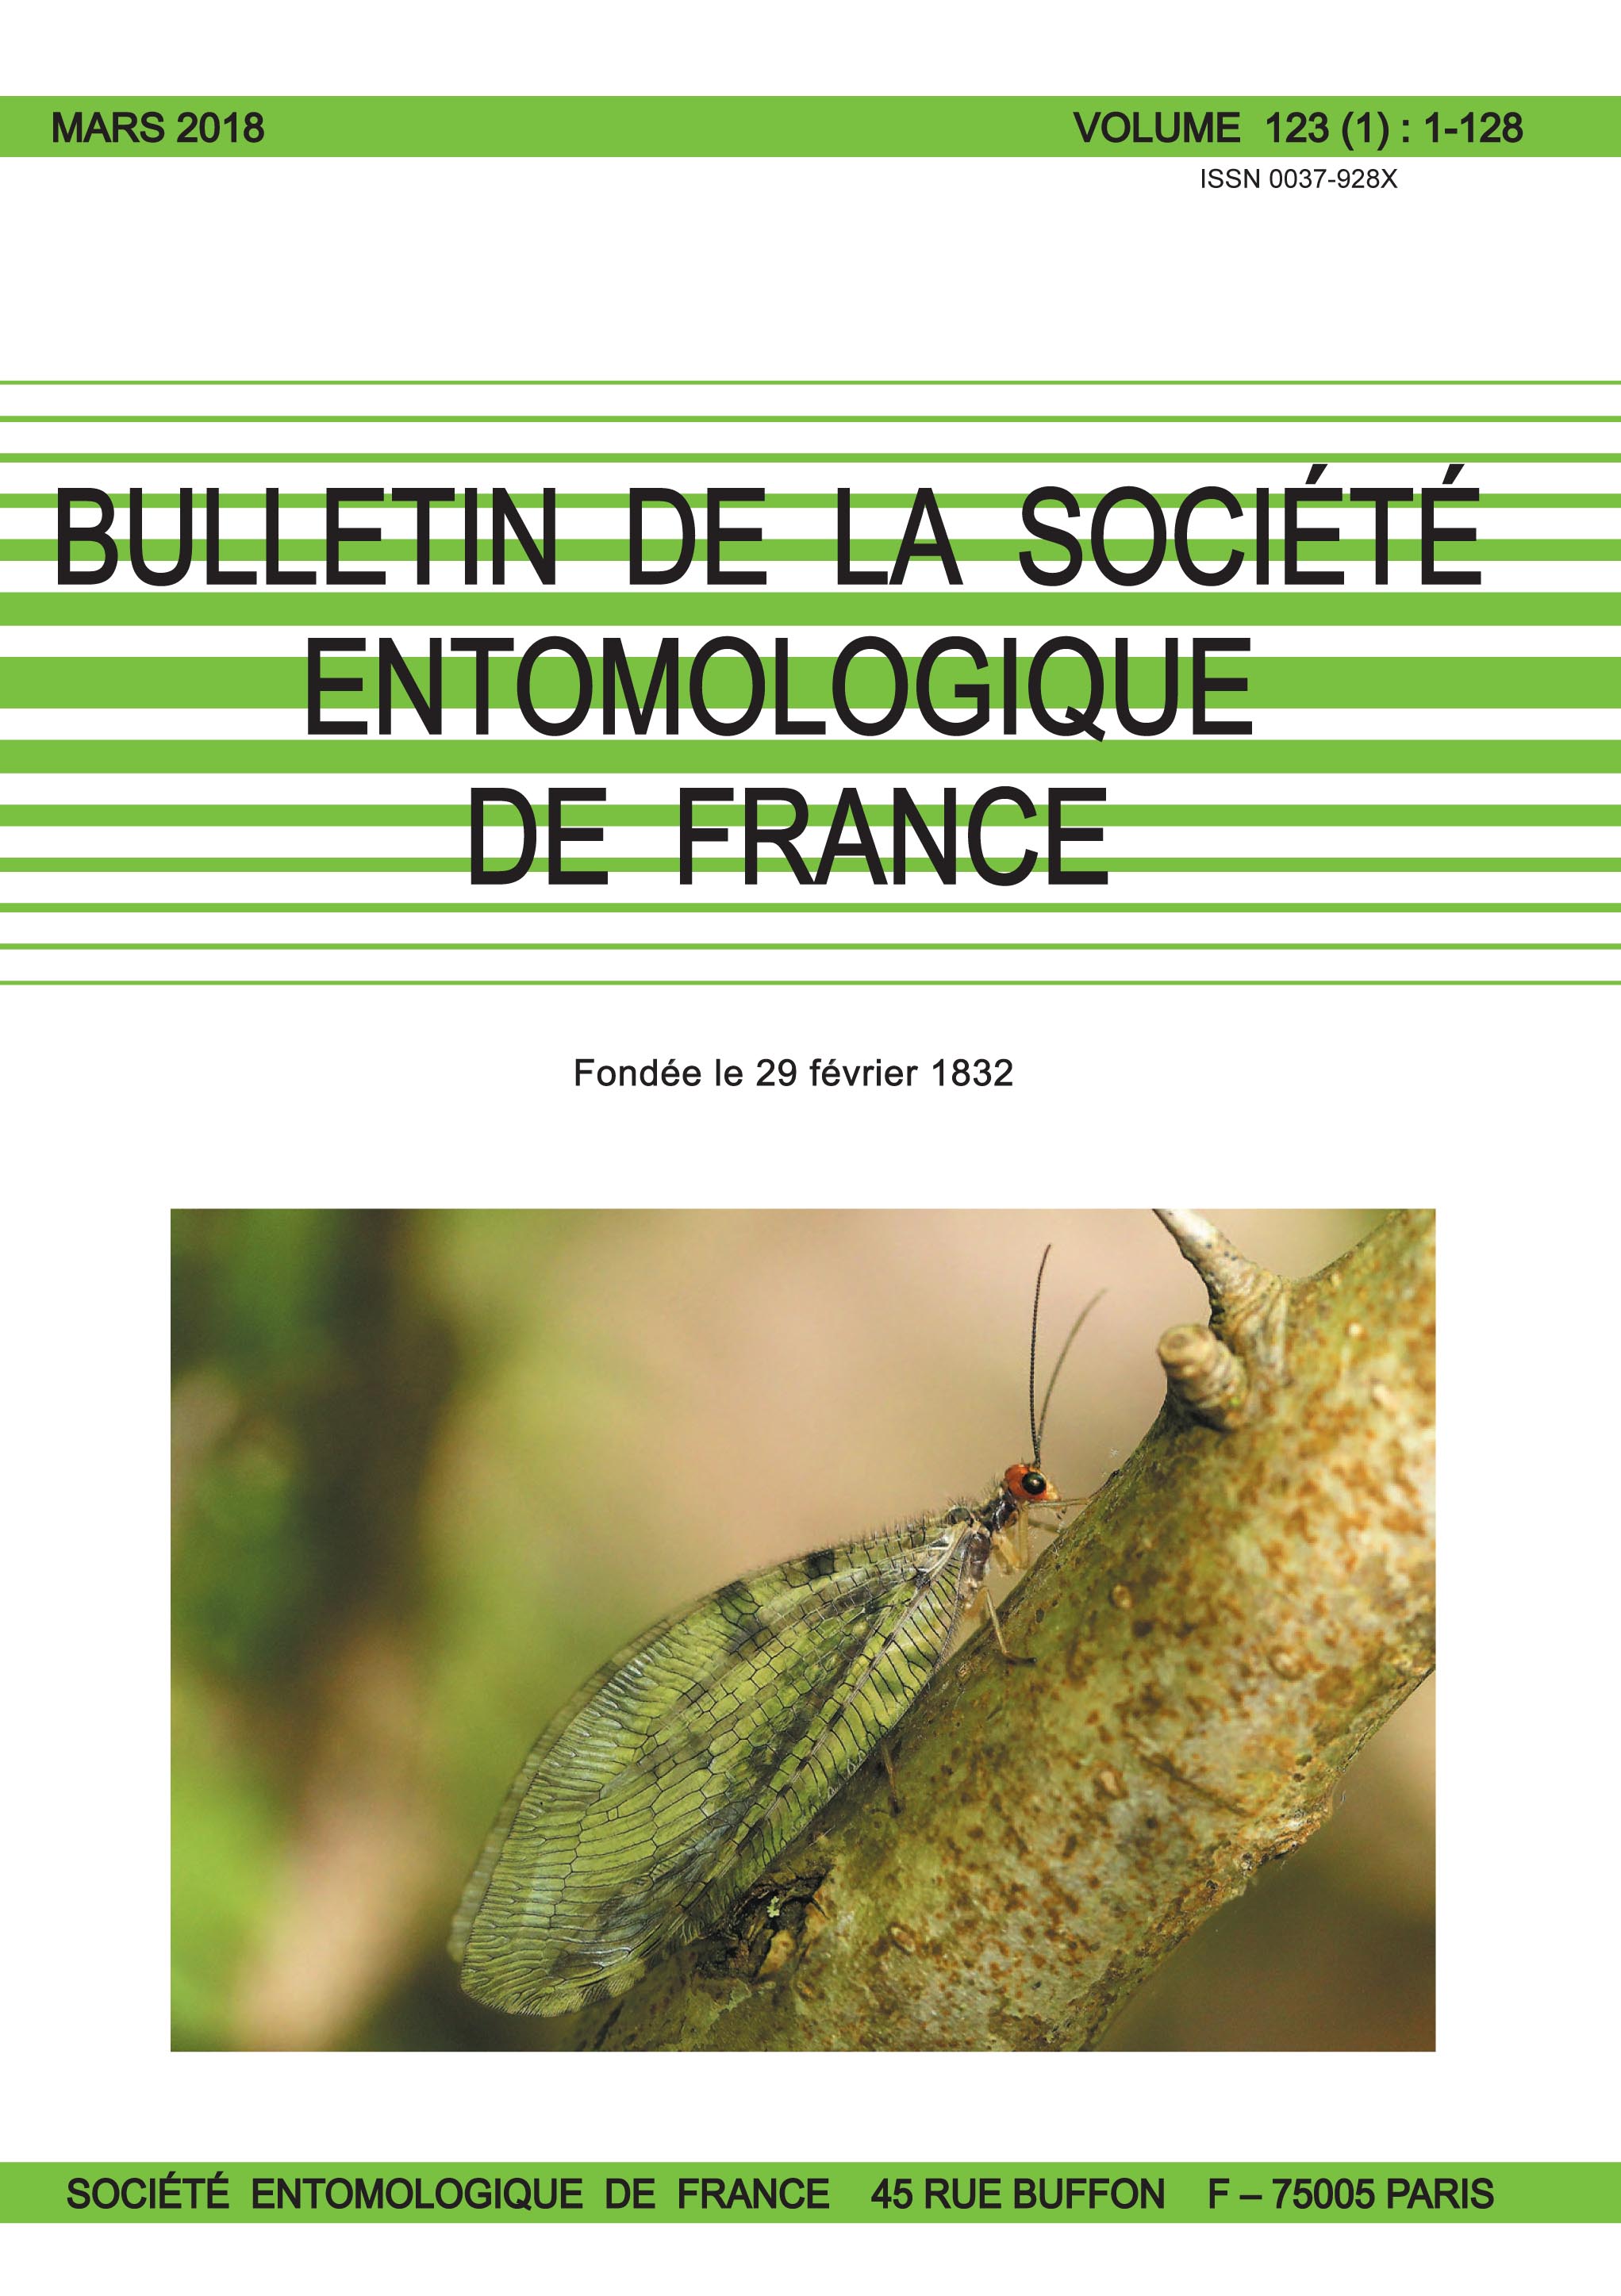 BULLETIN DE LA SOCIETE ENTOMOLOGIQUE DE FRANCE